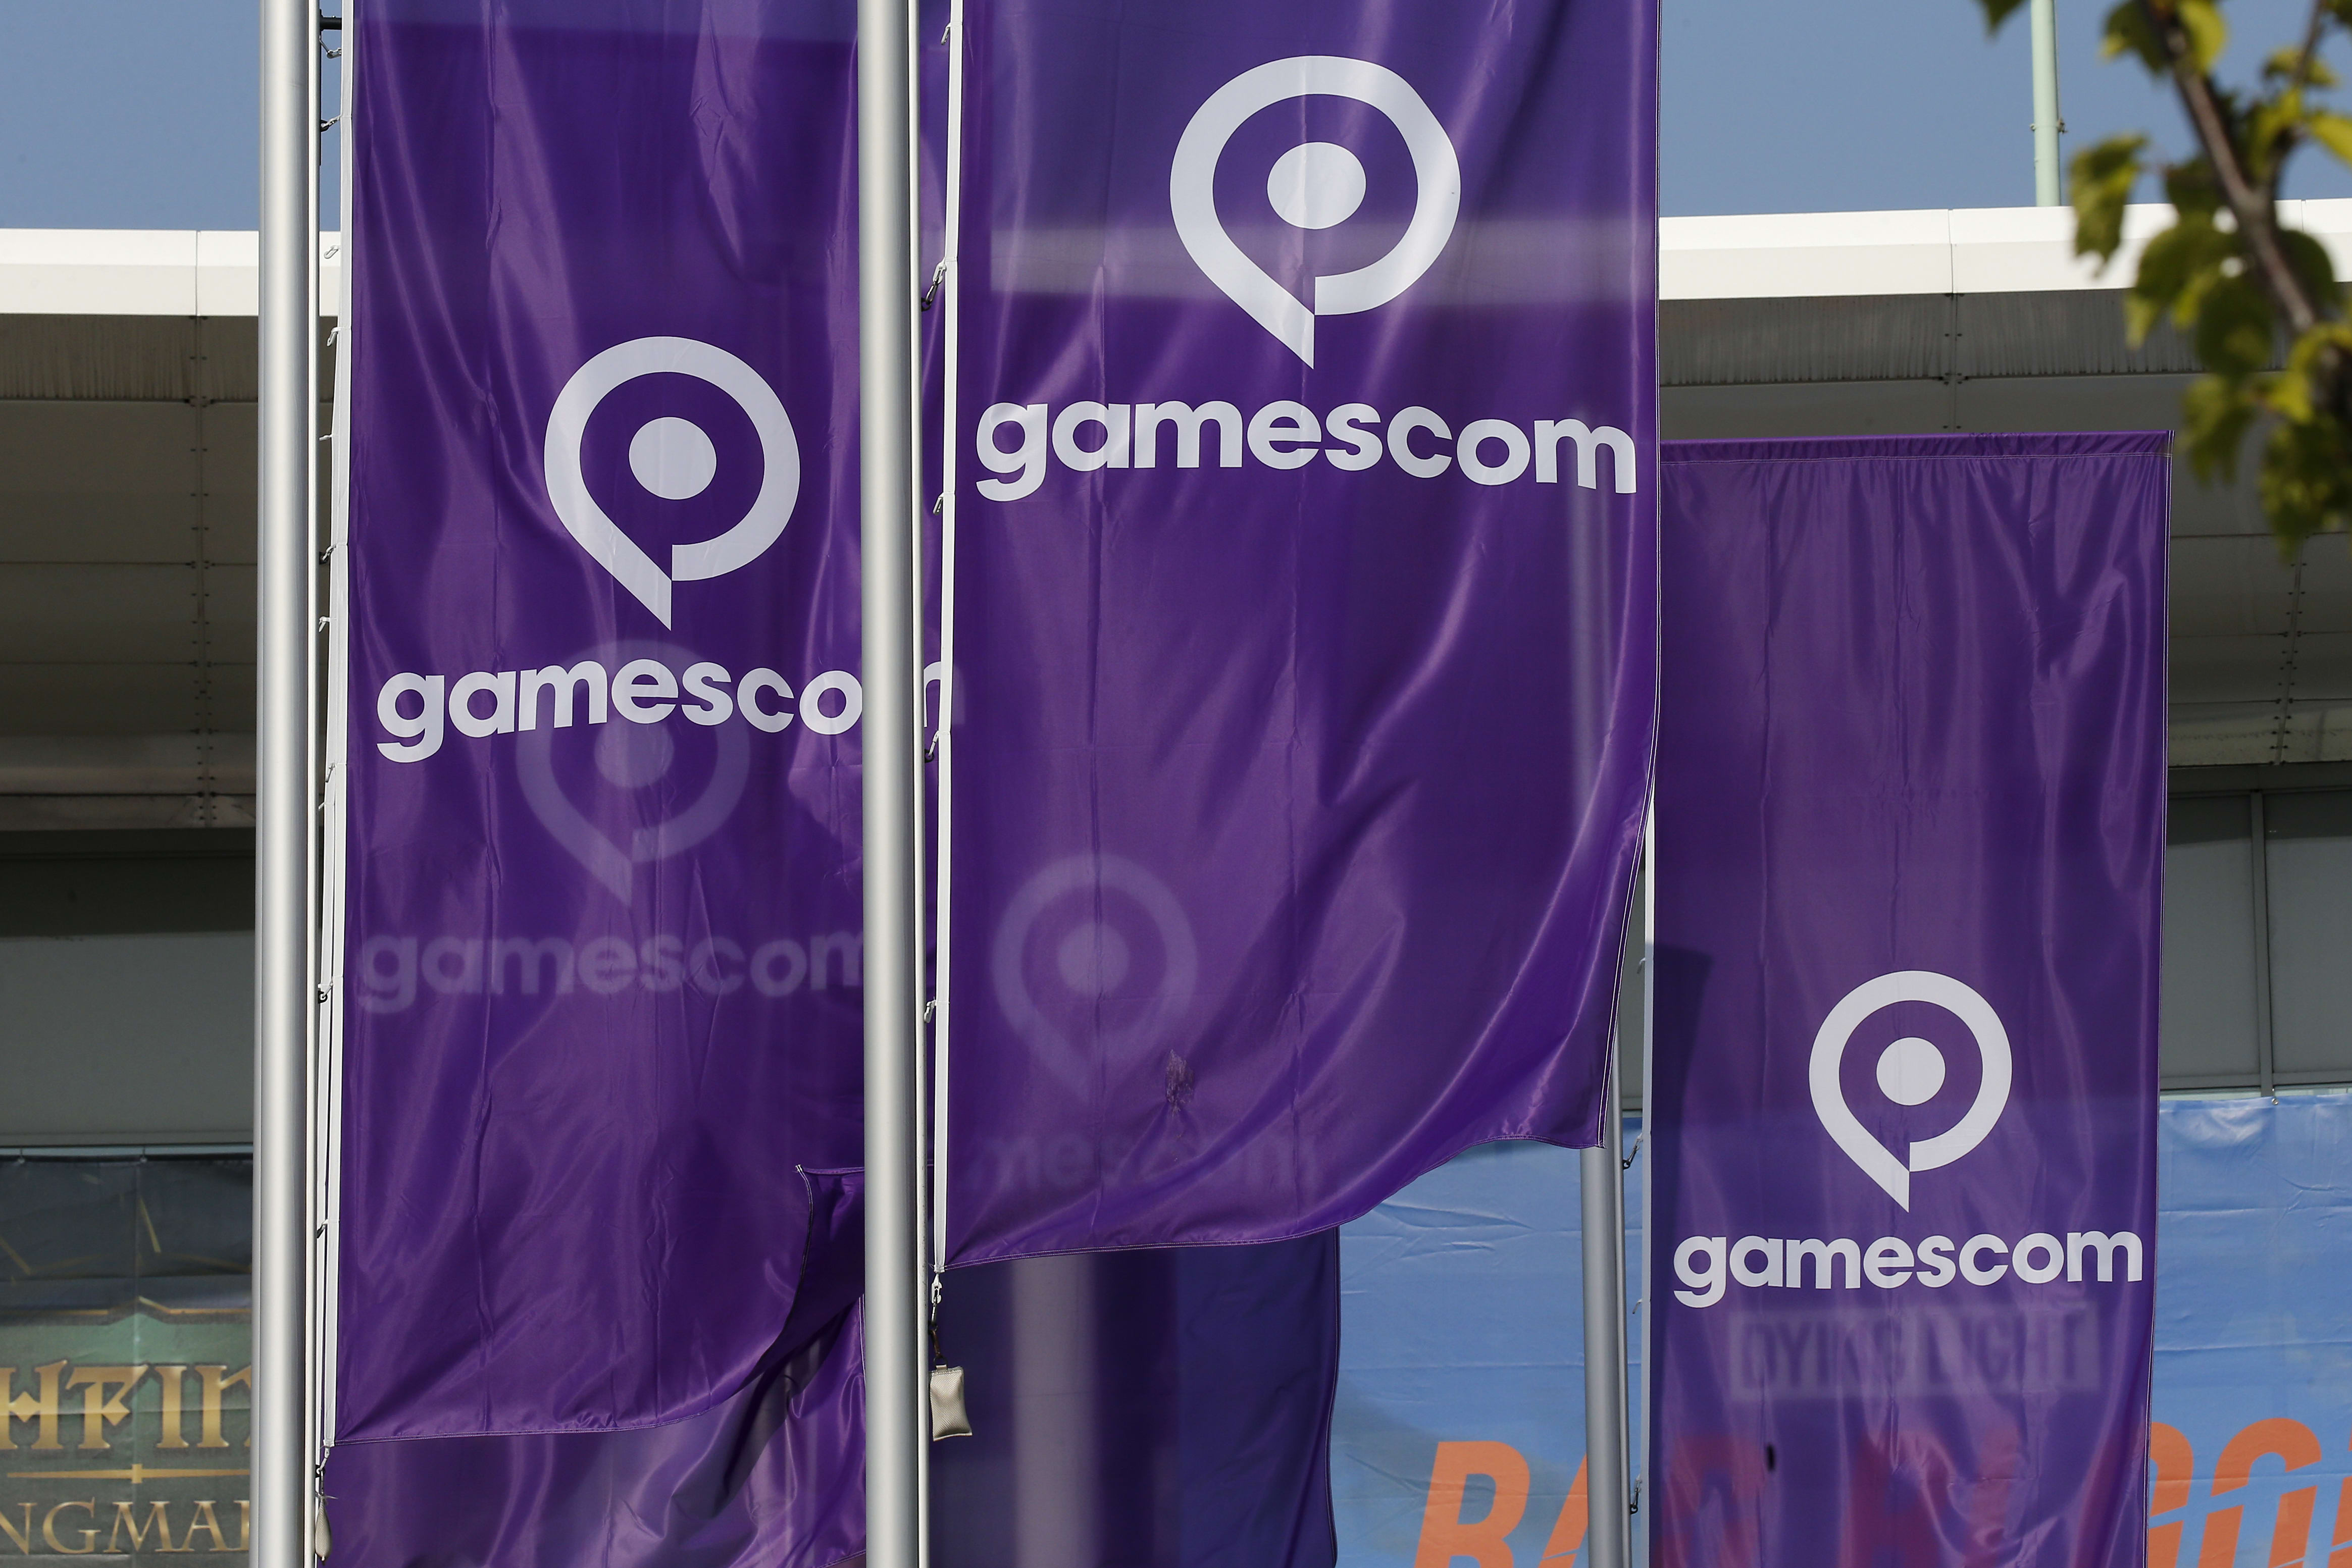 Gamescom banners